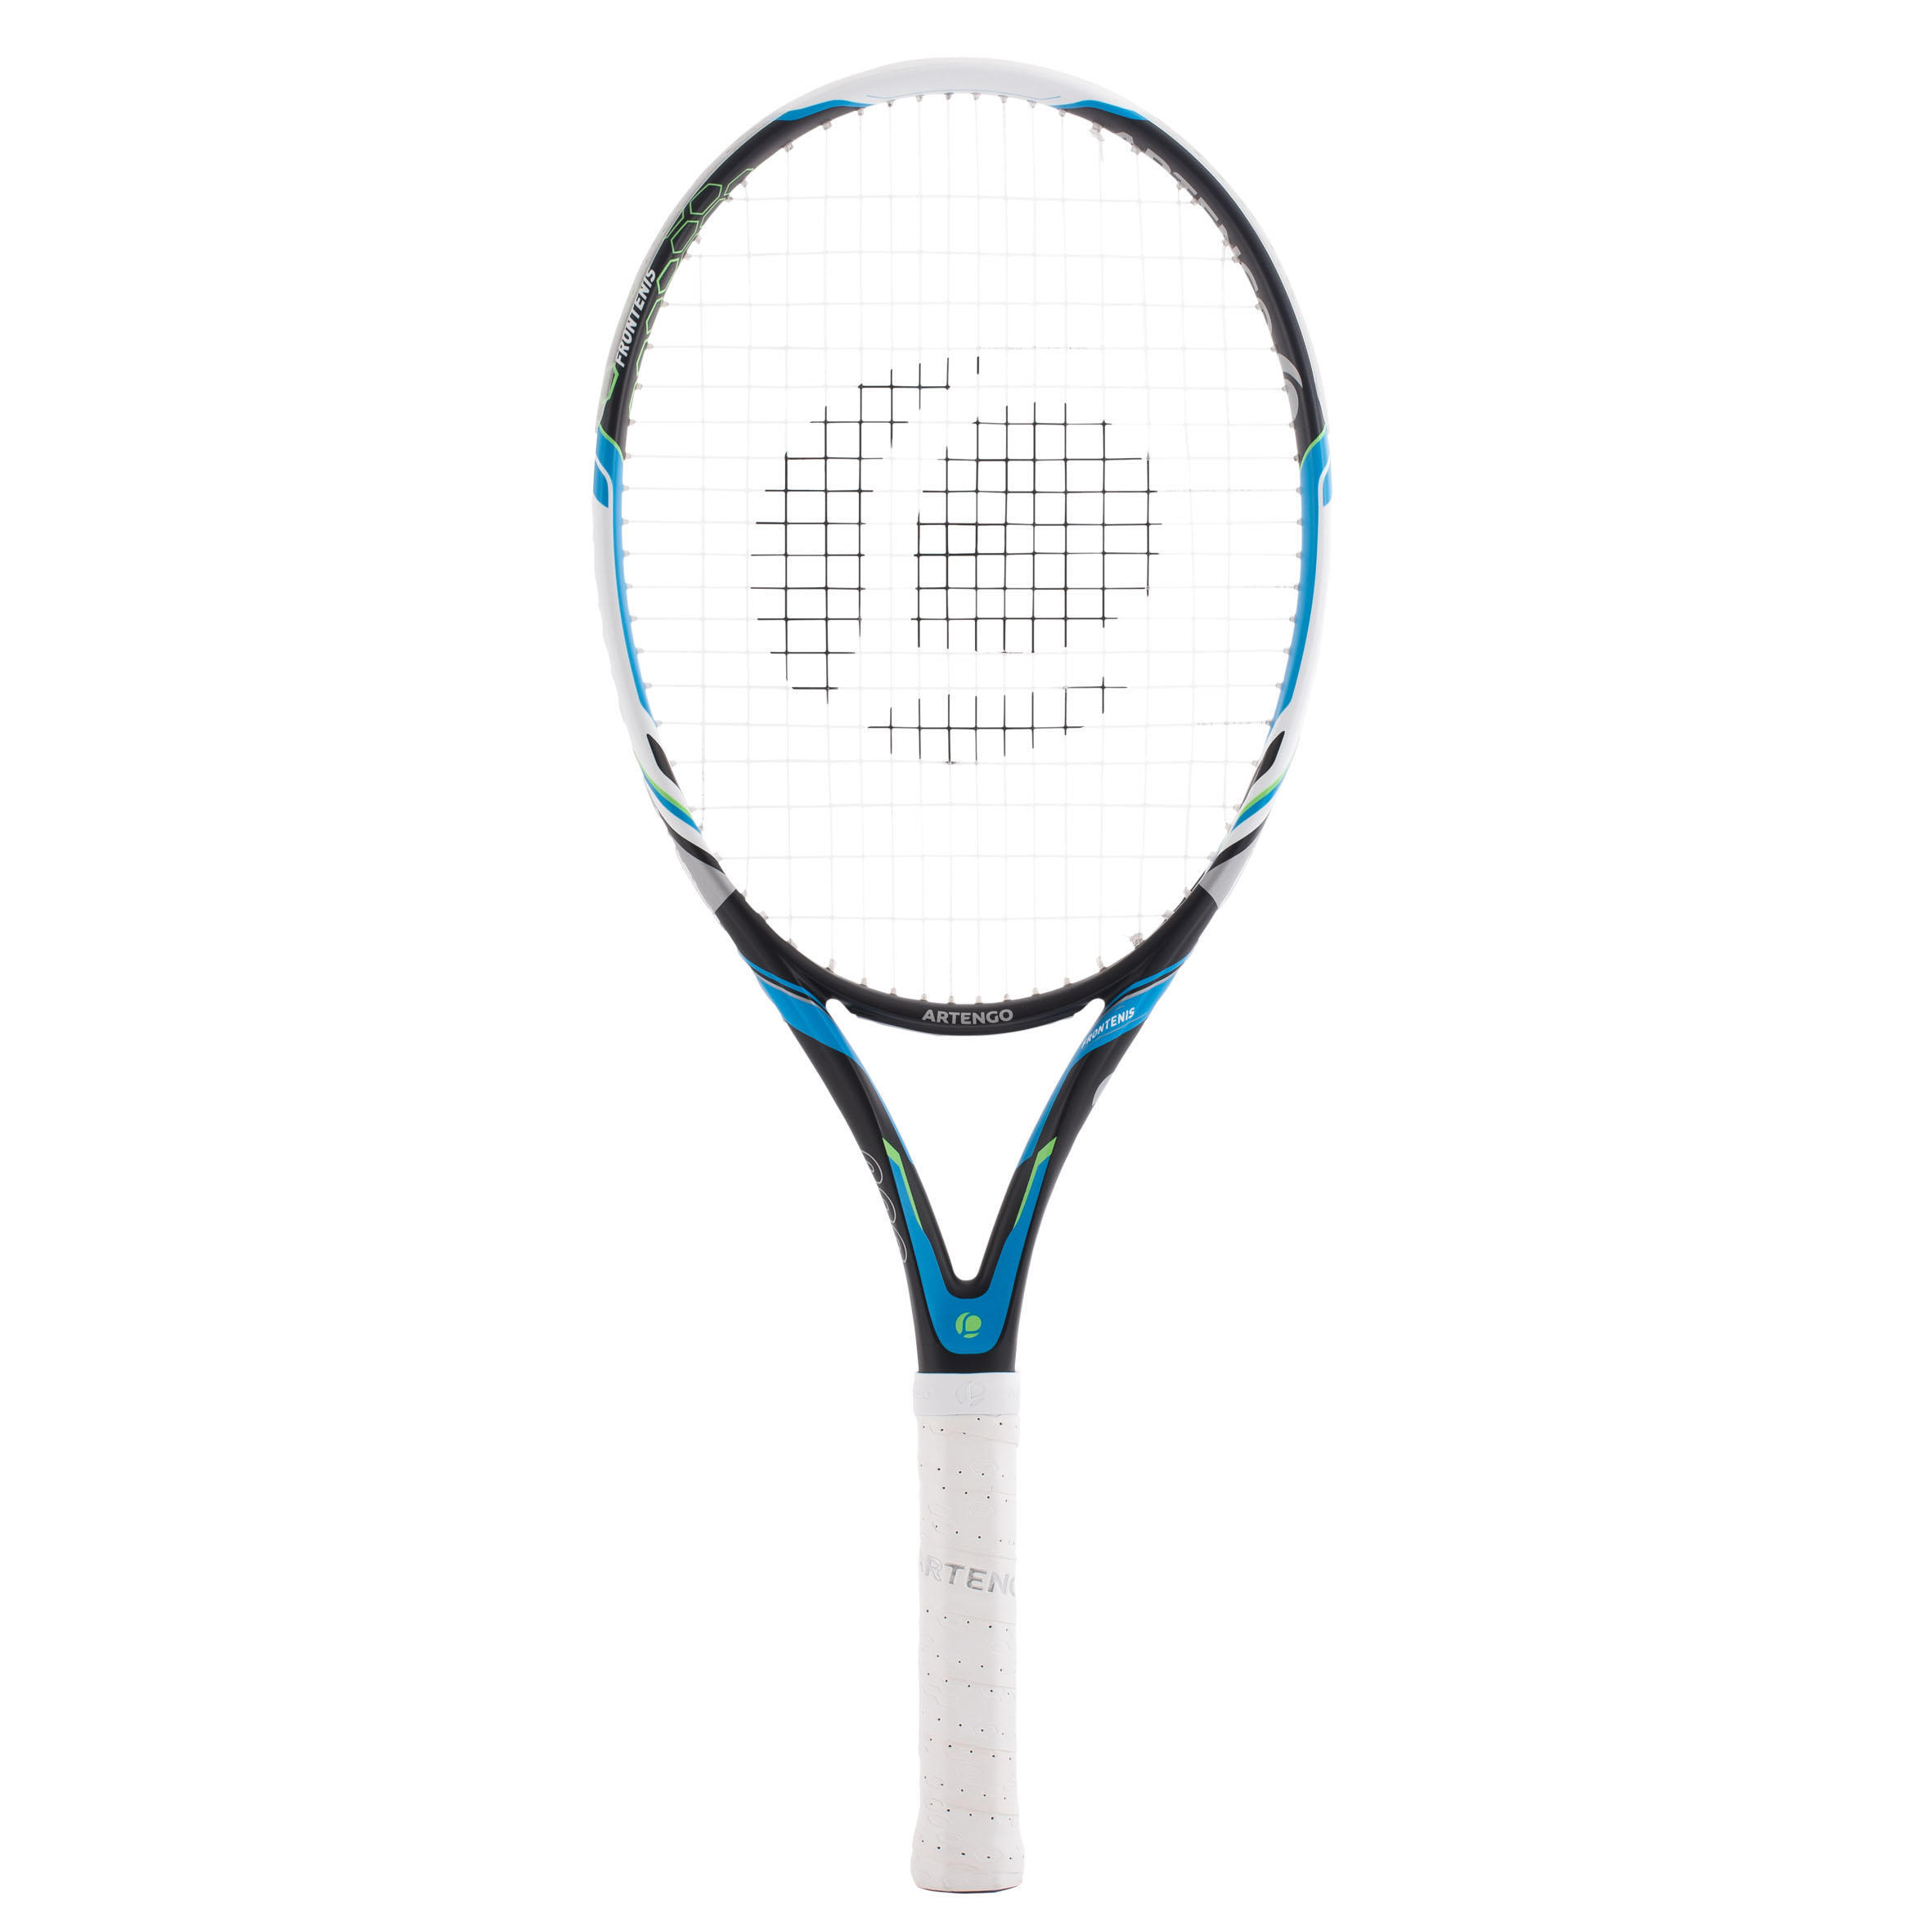 Передняя теннисная ракетка FTR 560 URBALL ракетка теннисная